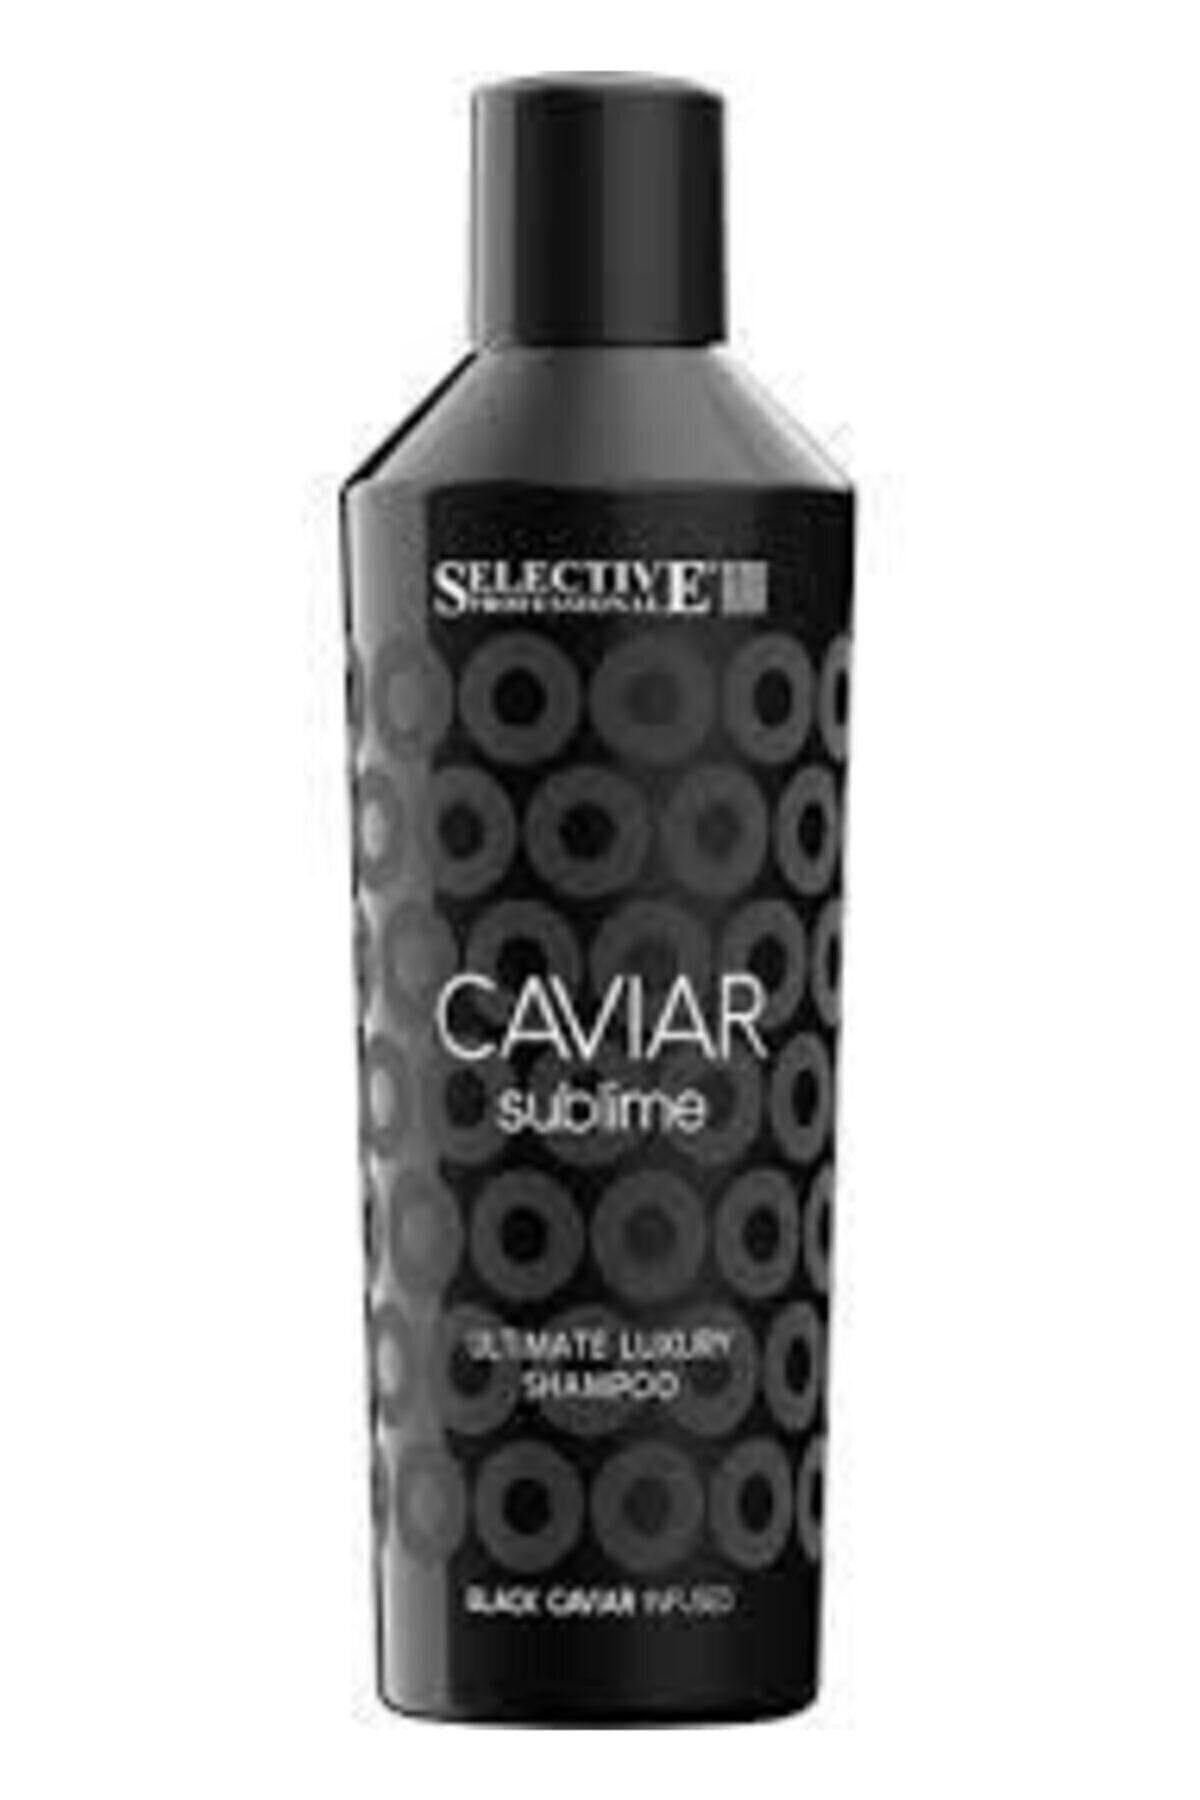 Selective Caviar Sublime Ultimate Luxury Şampuan 1000ml Newonlıne.6